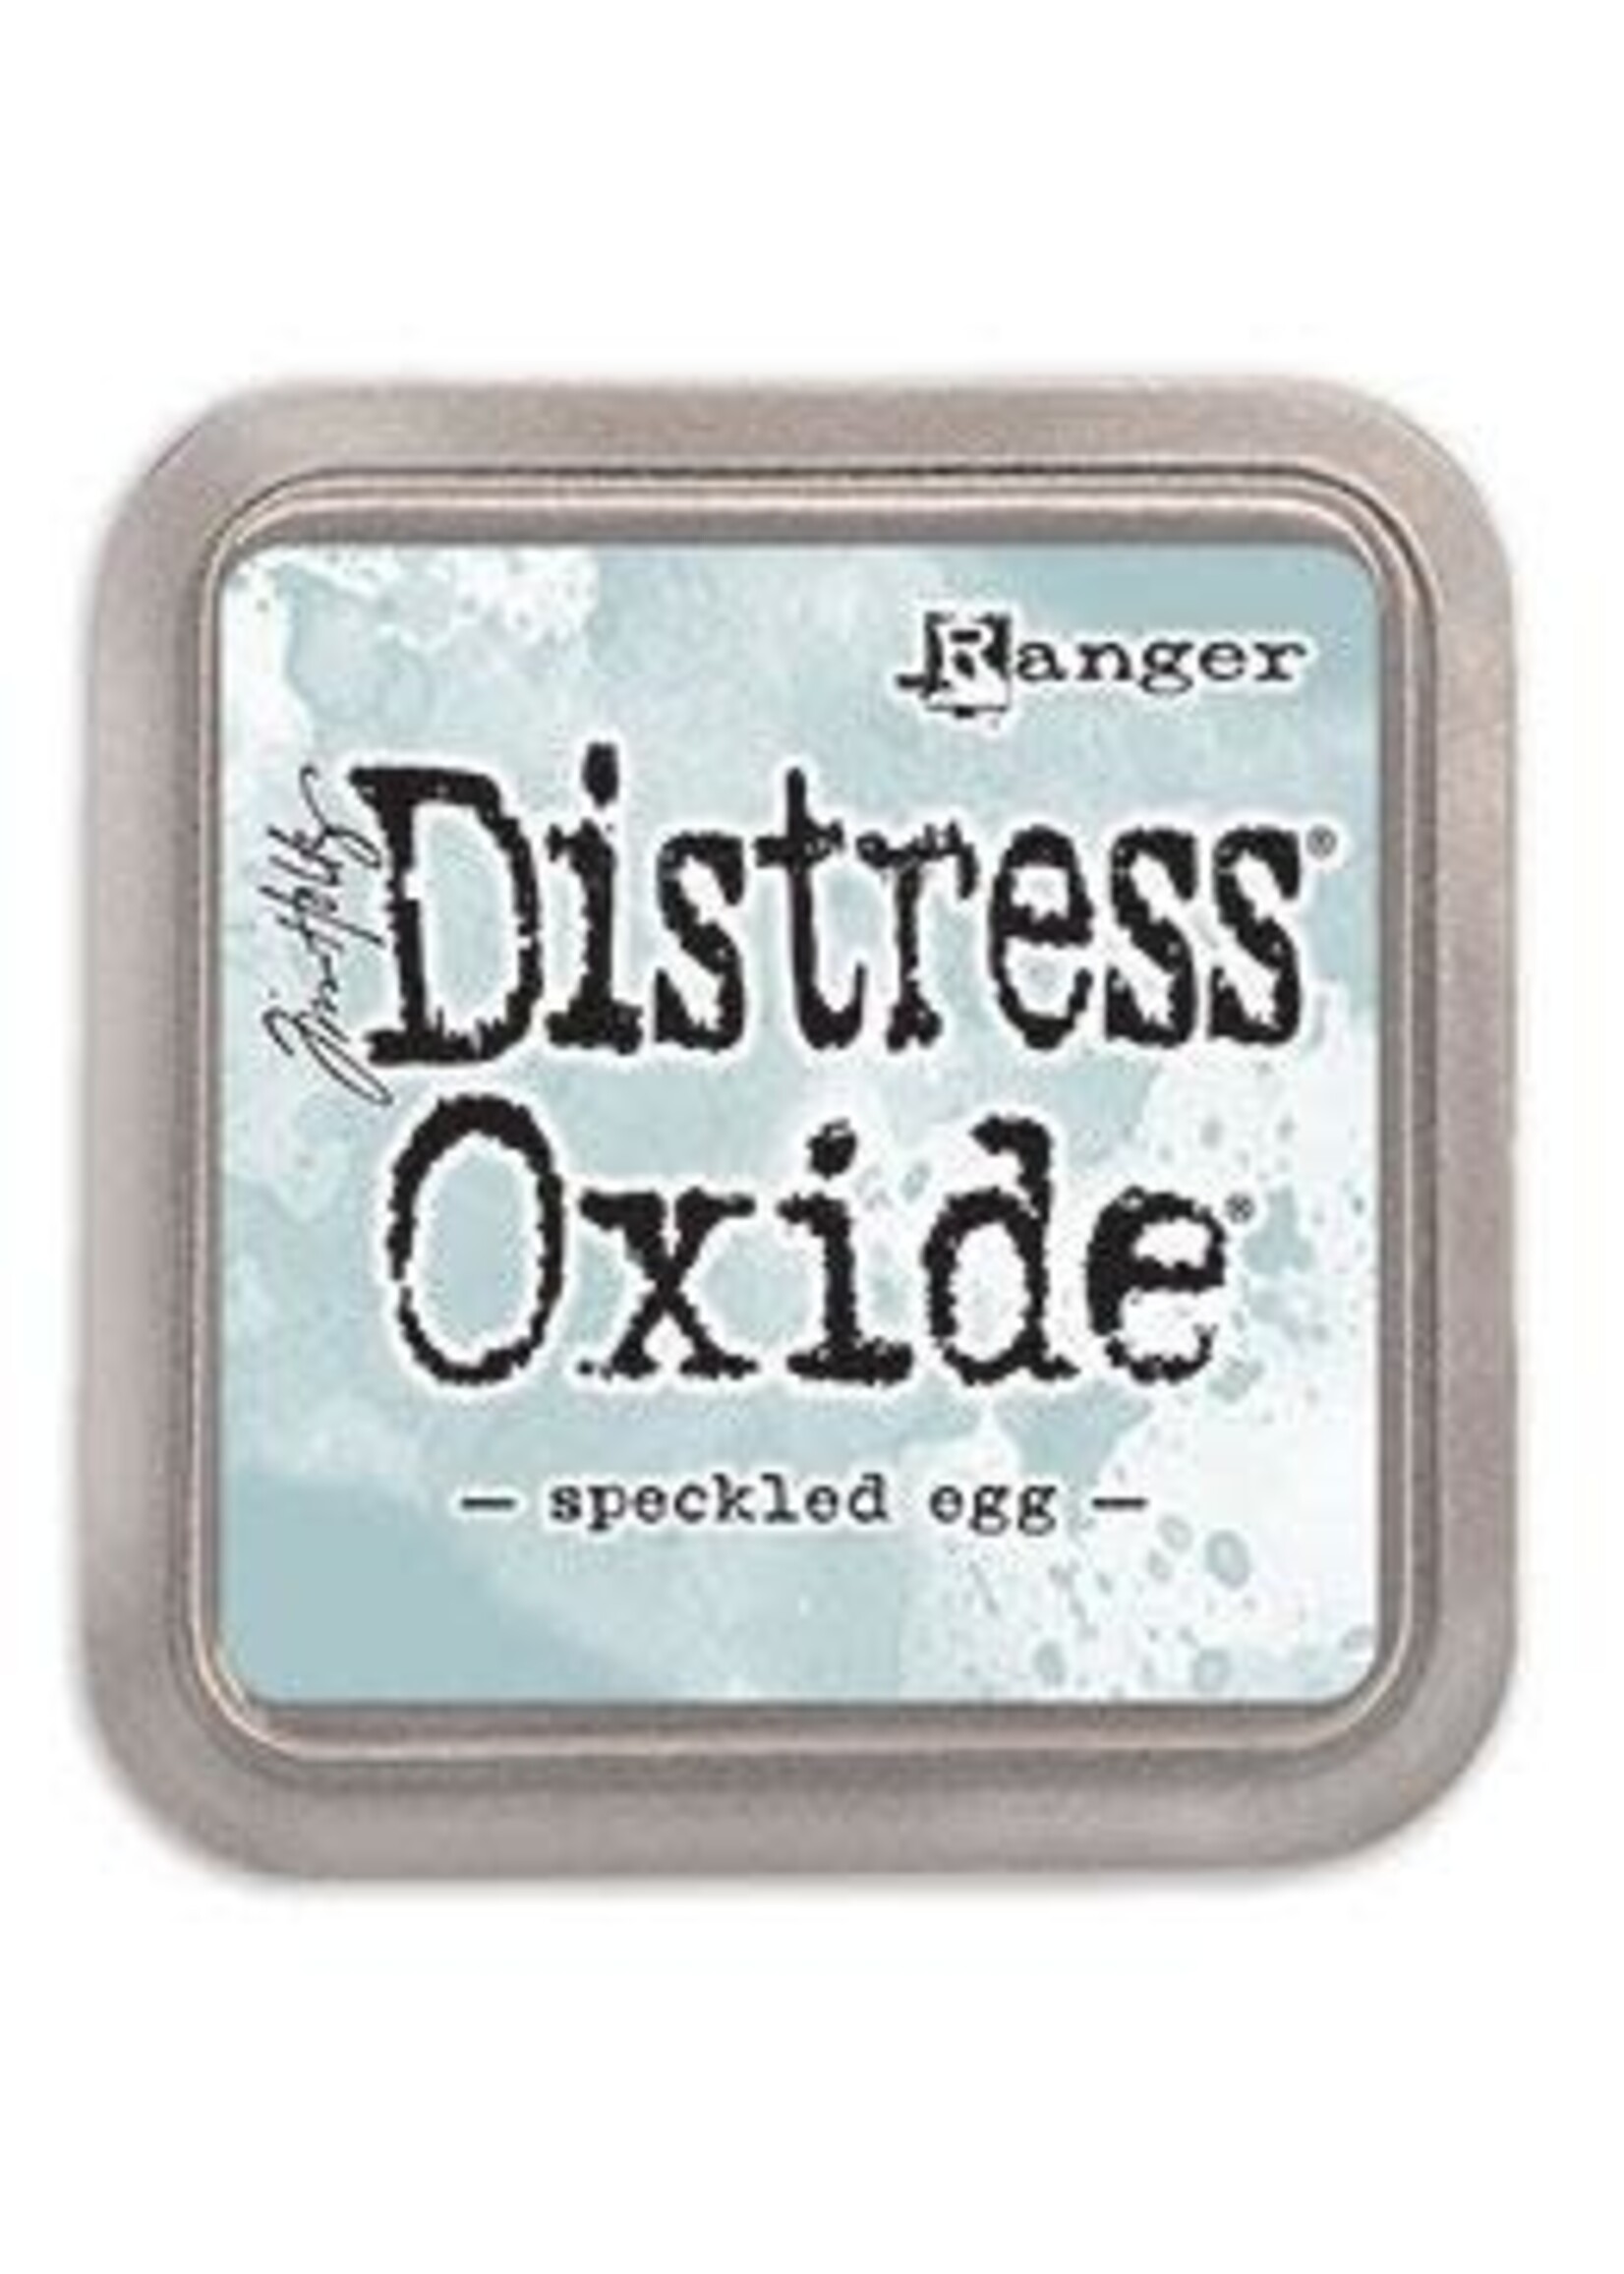 Distress Oxide Pad Speckled Egg